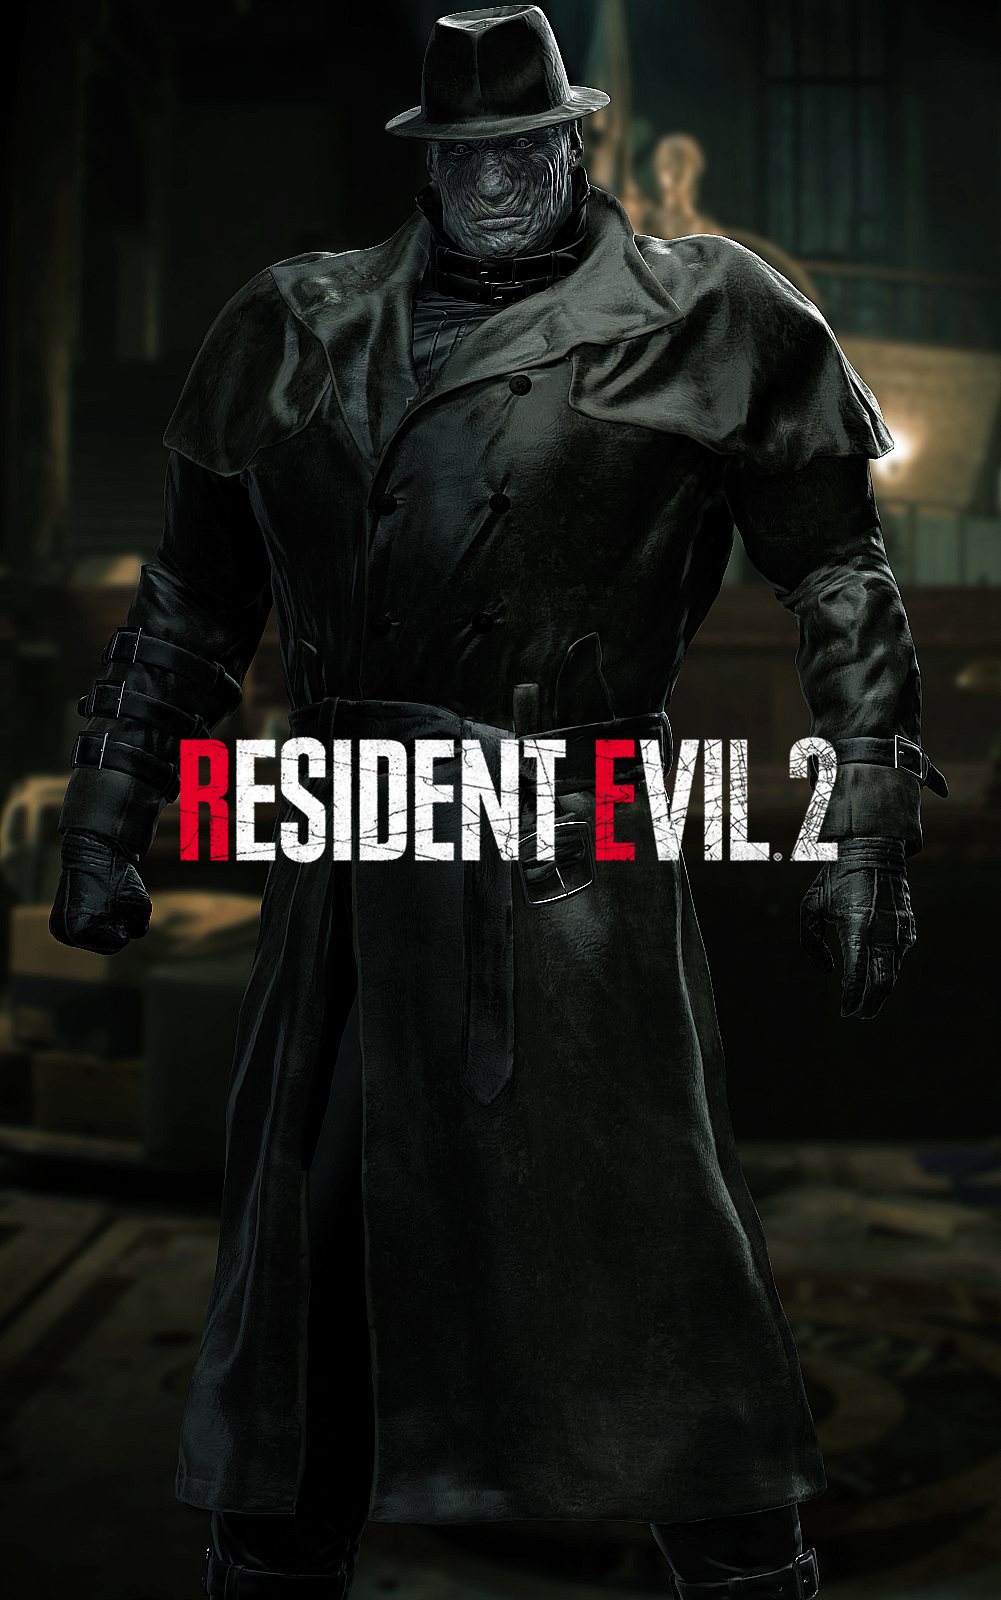 Resident Evil 2-Tyrant [Mr.x] by Yakoi-44 on DeviantArt